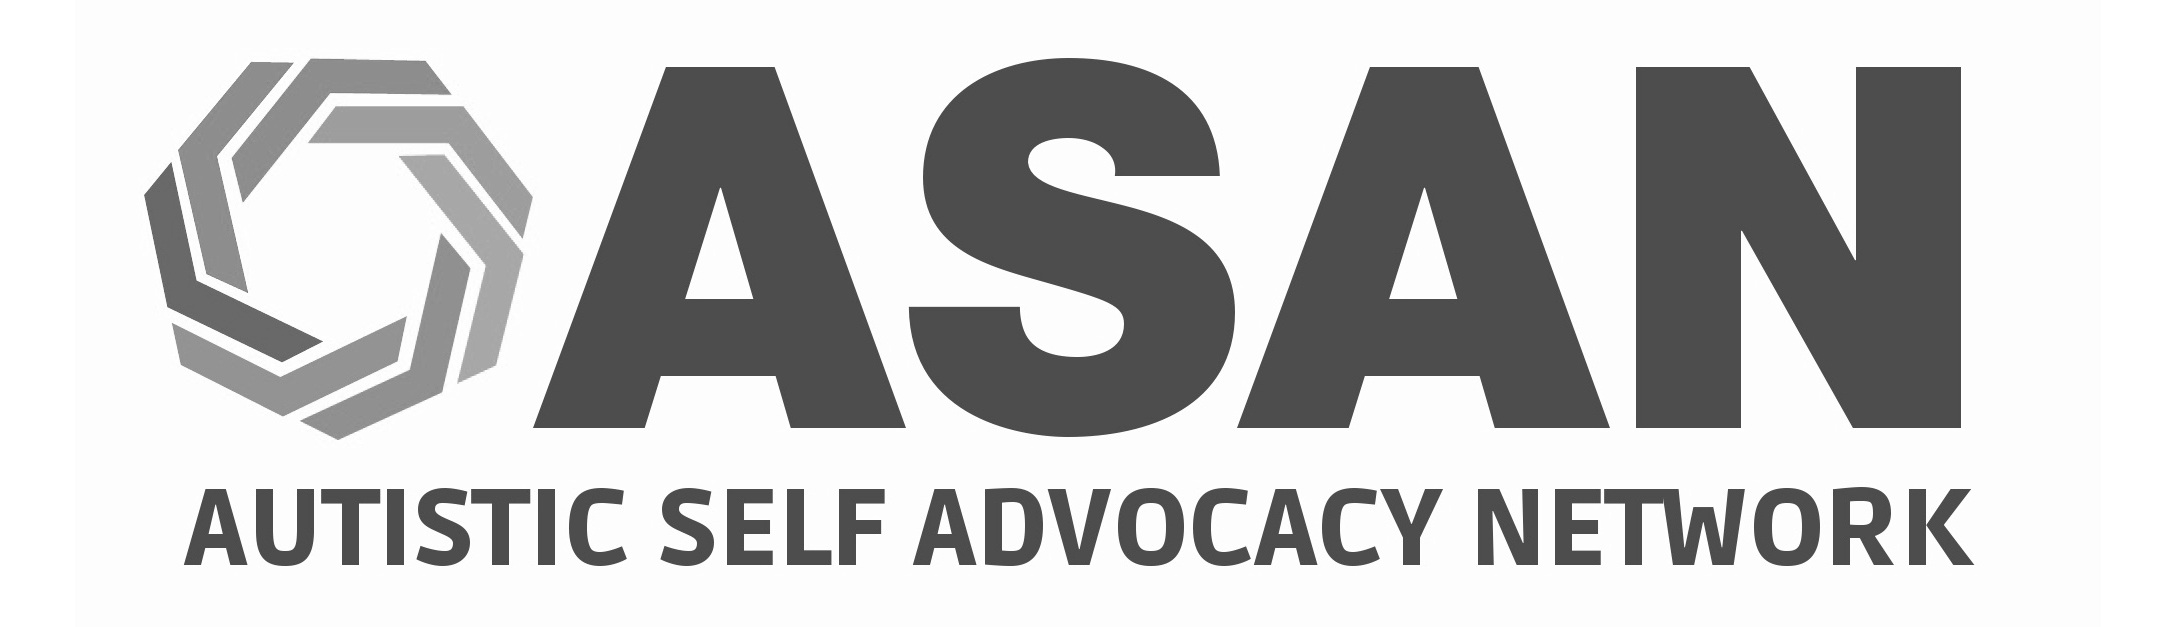 Autistic Self Advocacy Network / Advocacy Network Self autistique